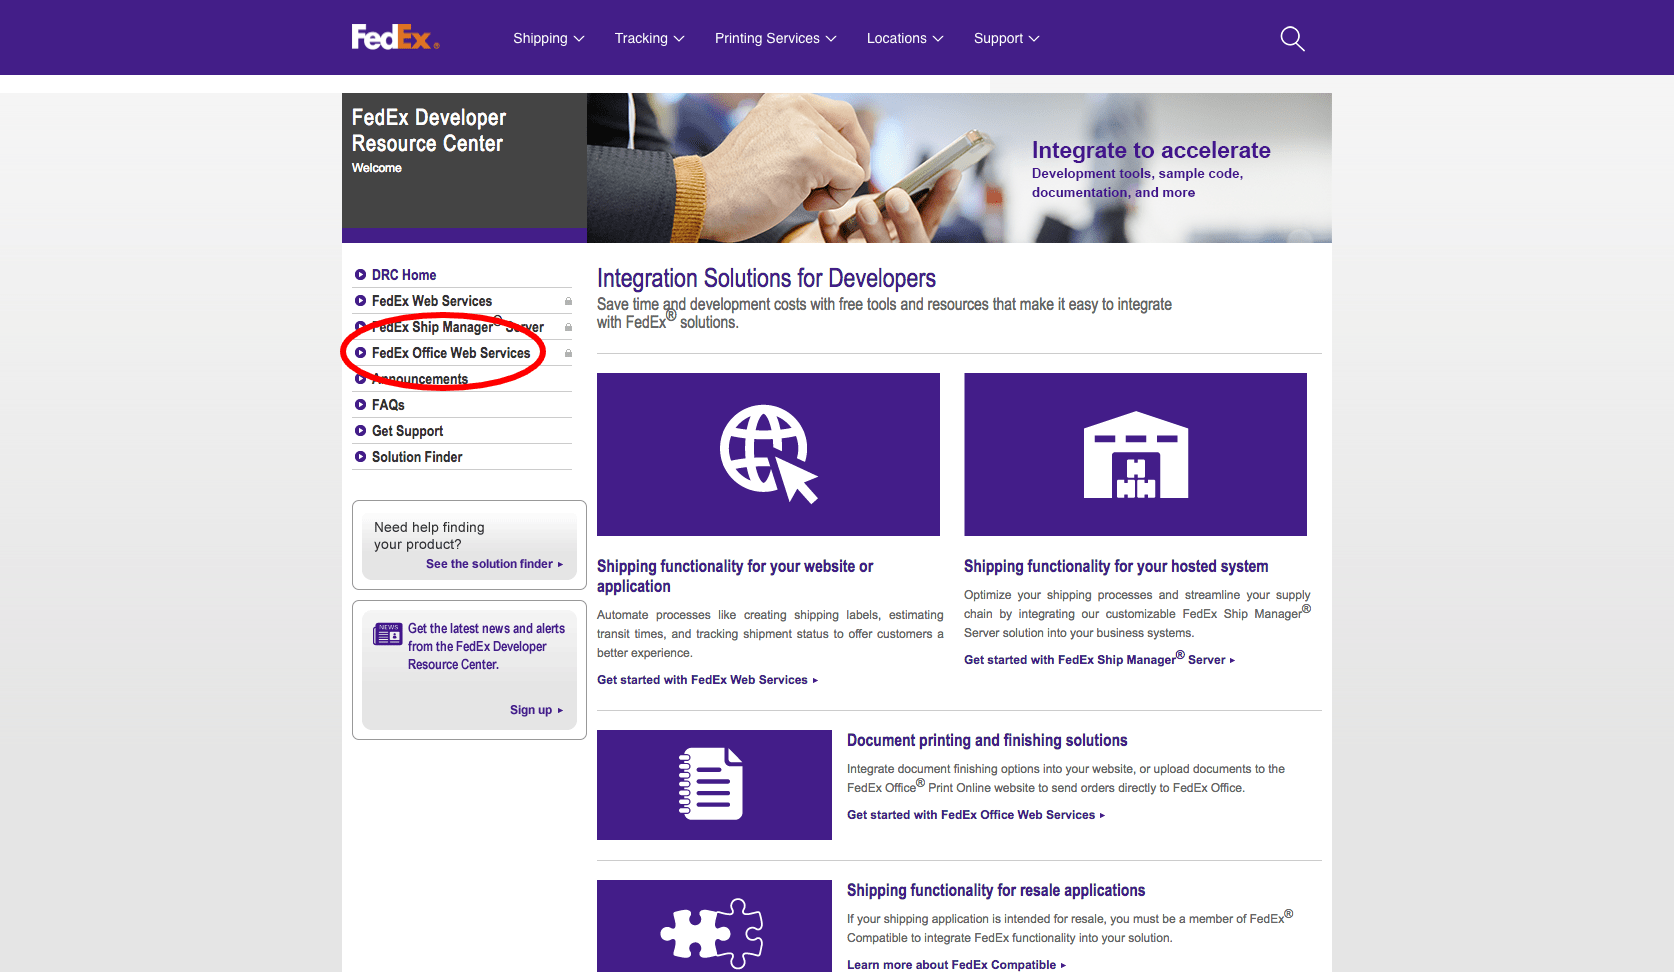 FedEx Web Services